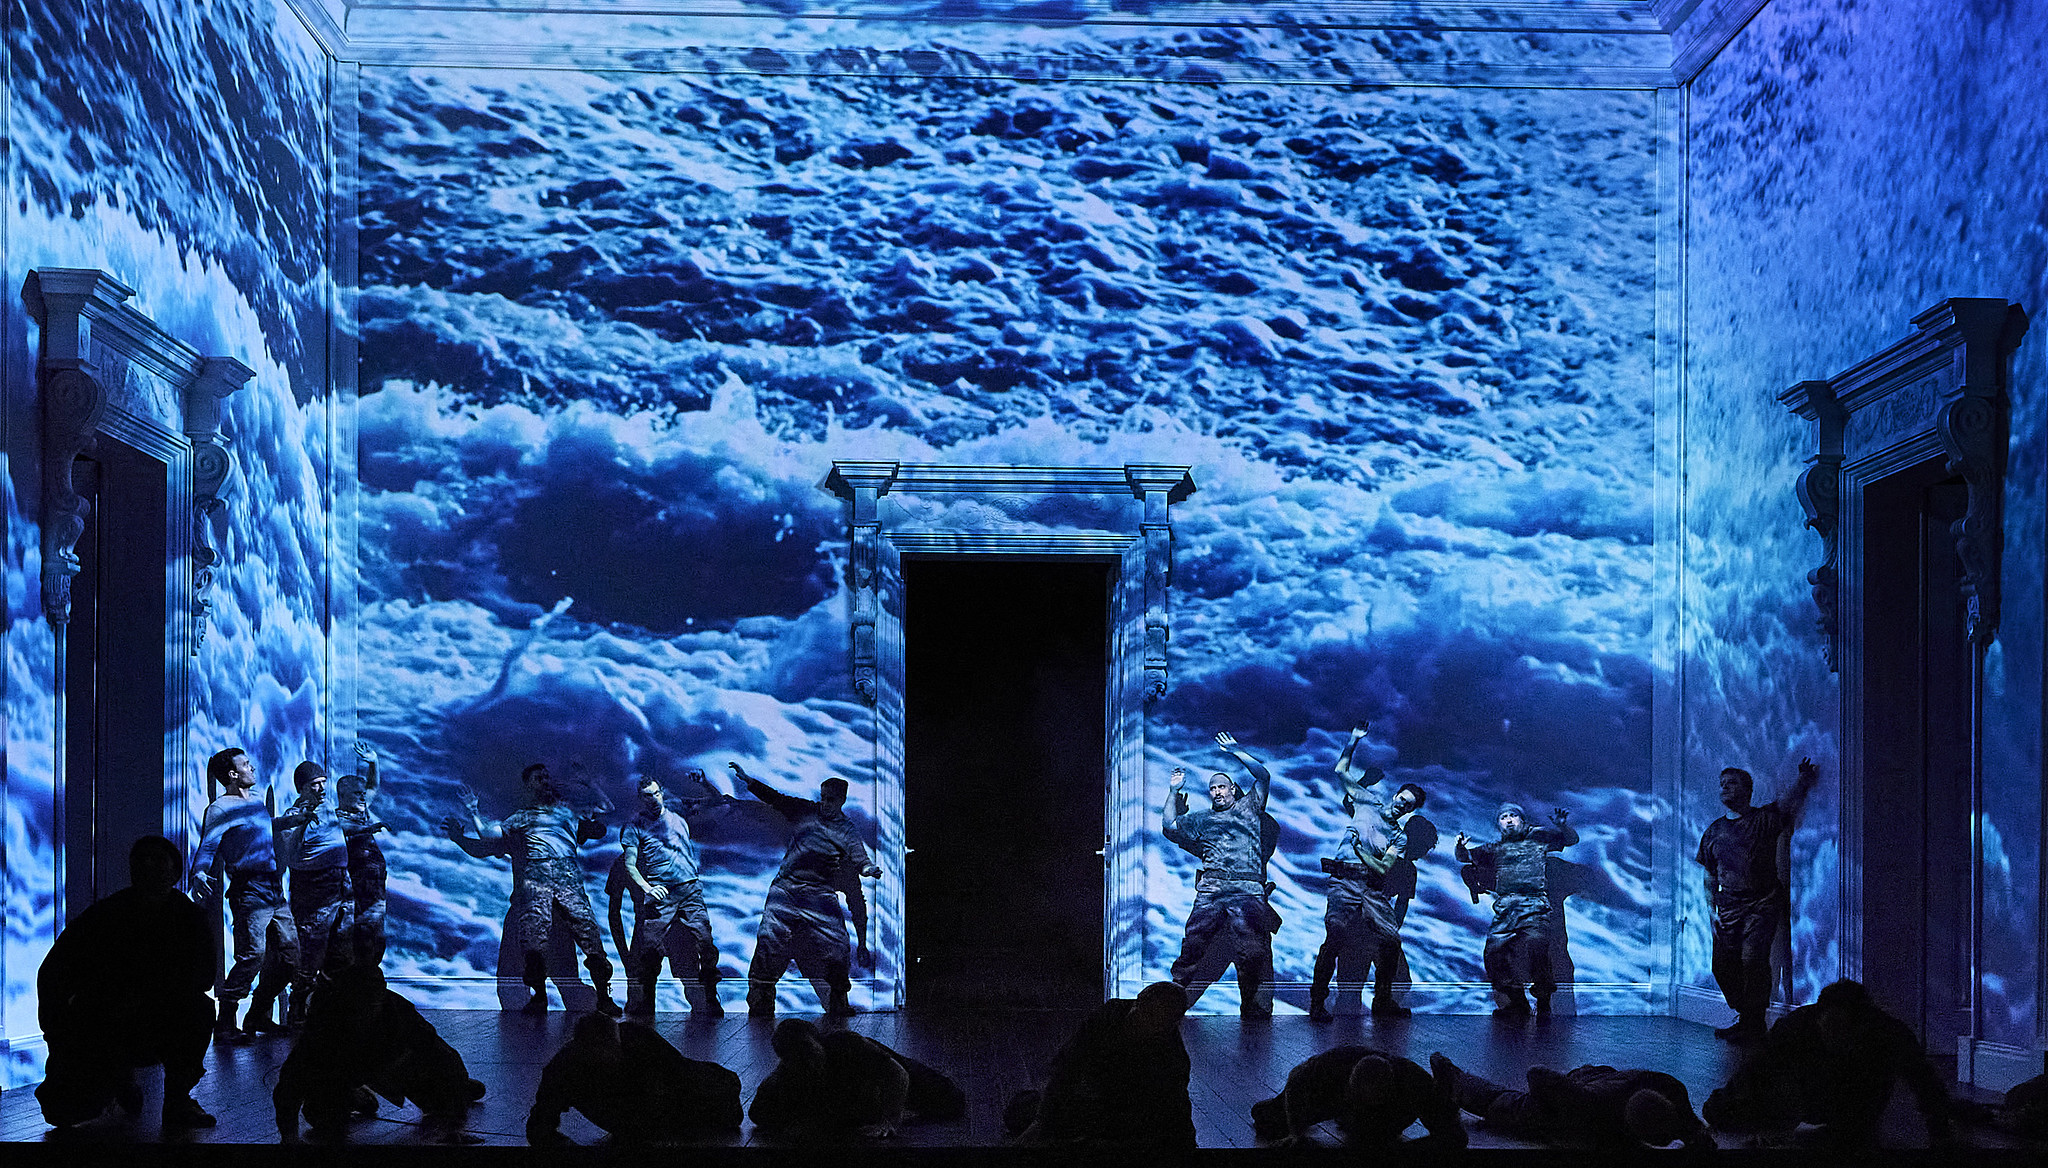 Idomeneo - Opera Australia